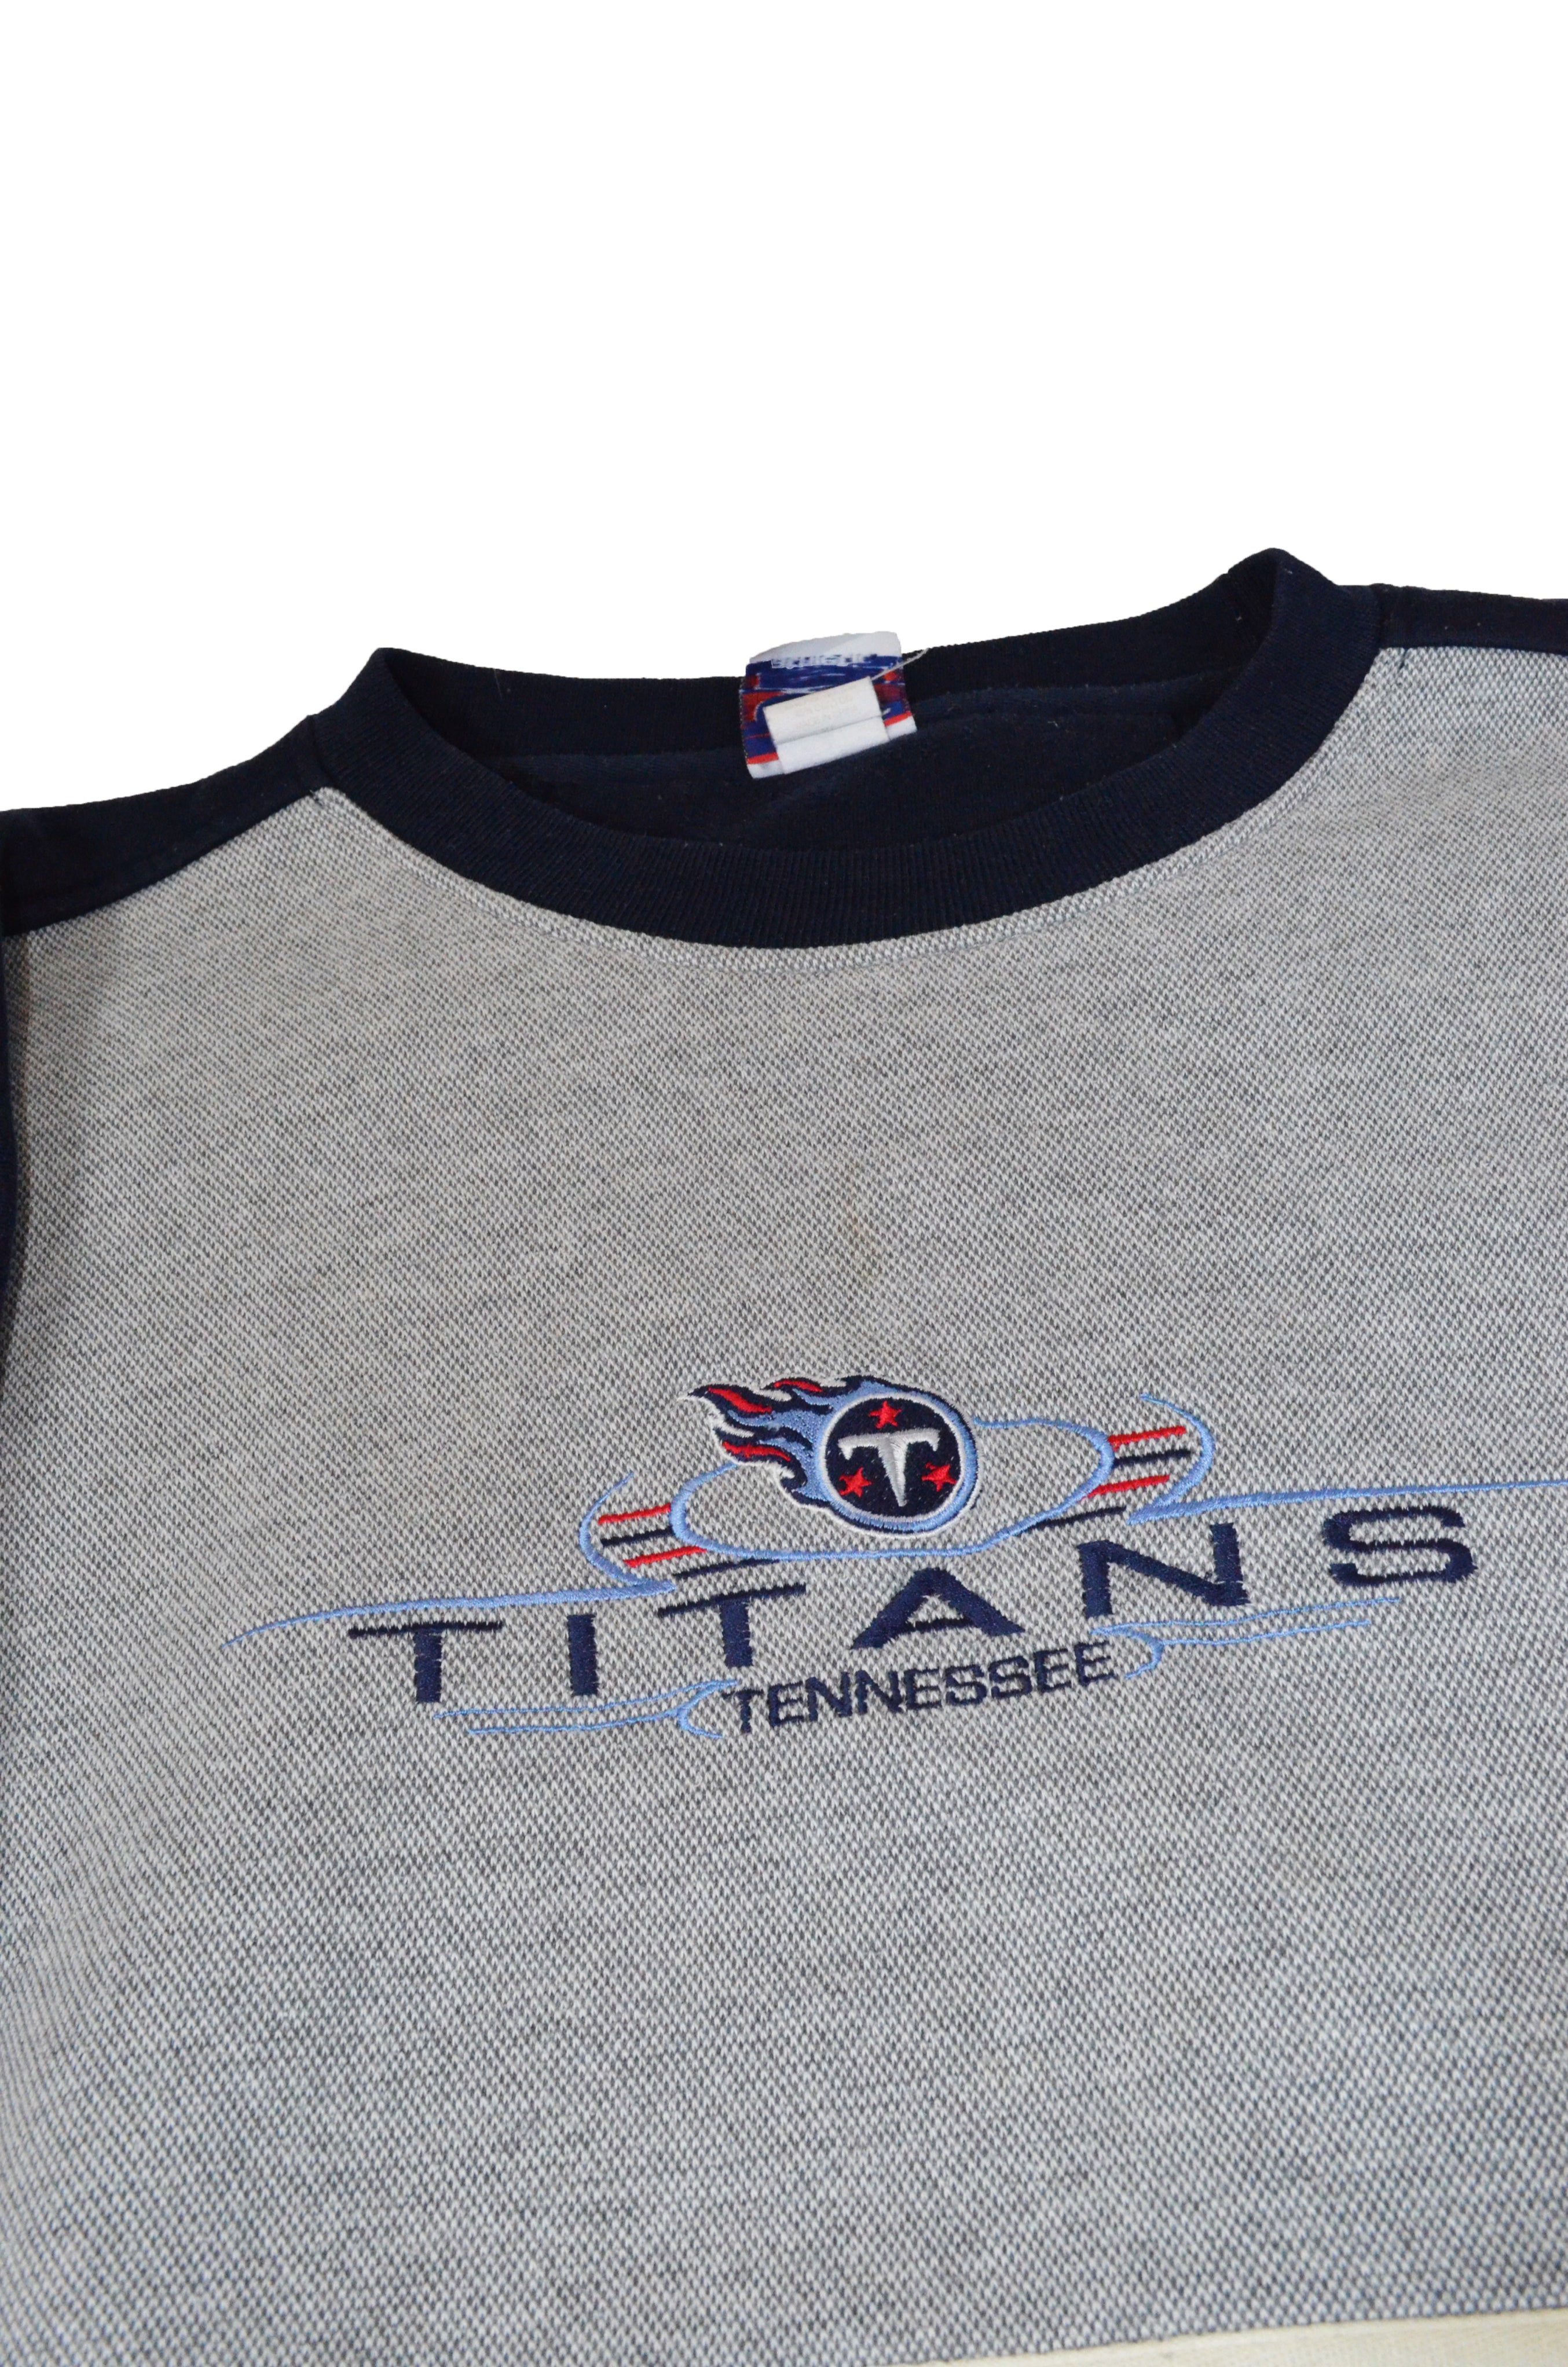 Titans Tennessee Grey & Navy Blue Crewneck